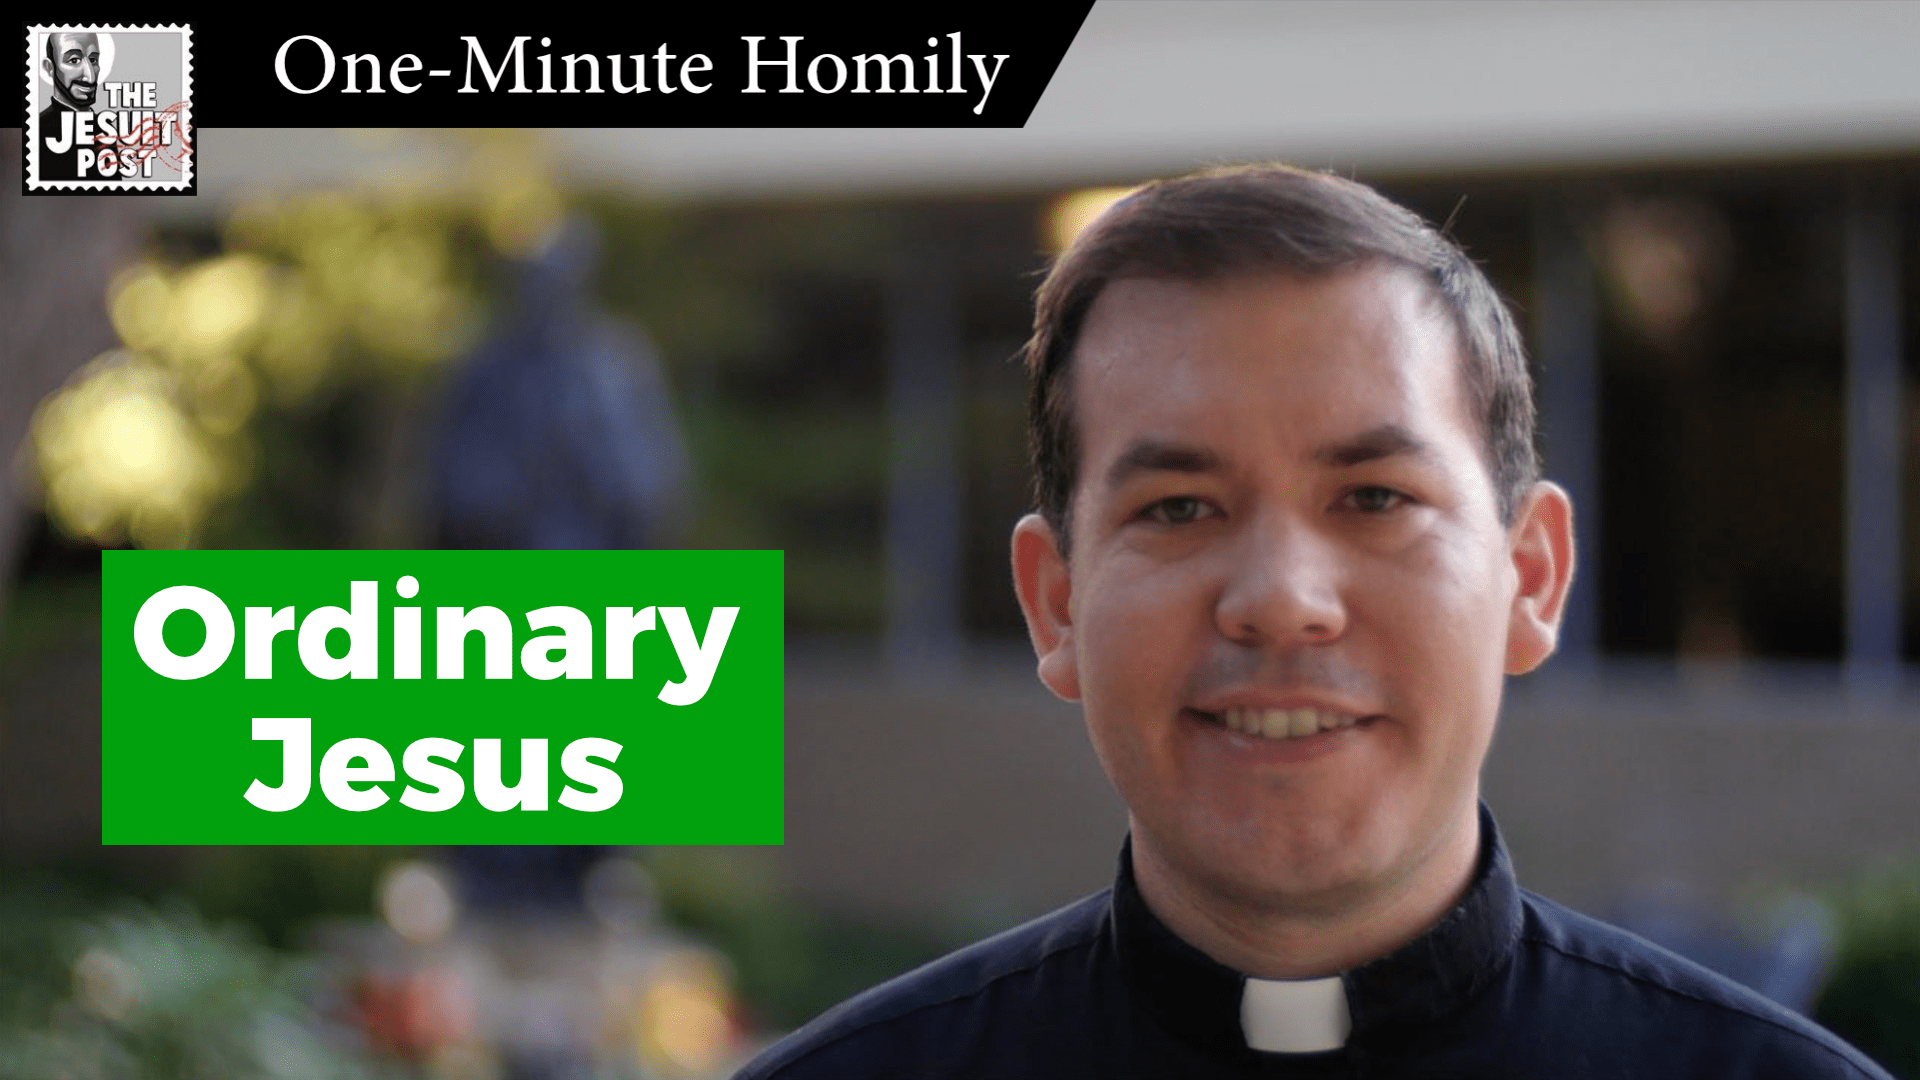 One-Minute Homily: “Ordinary Jesus”